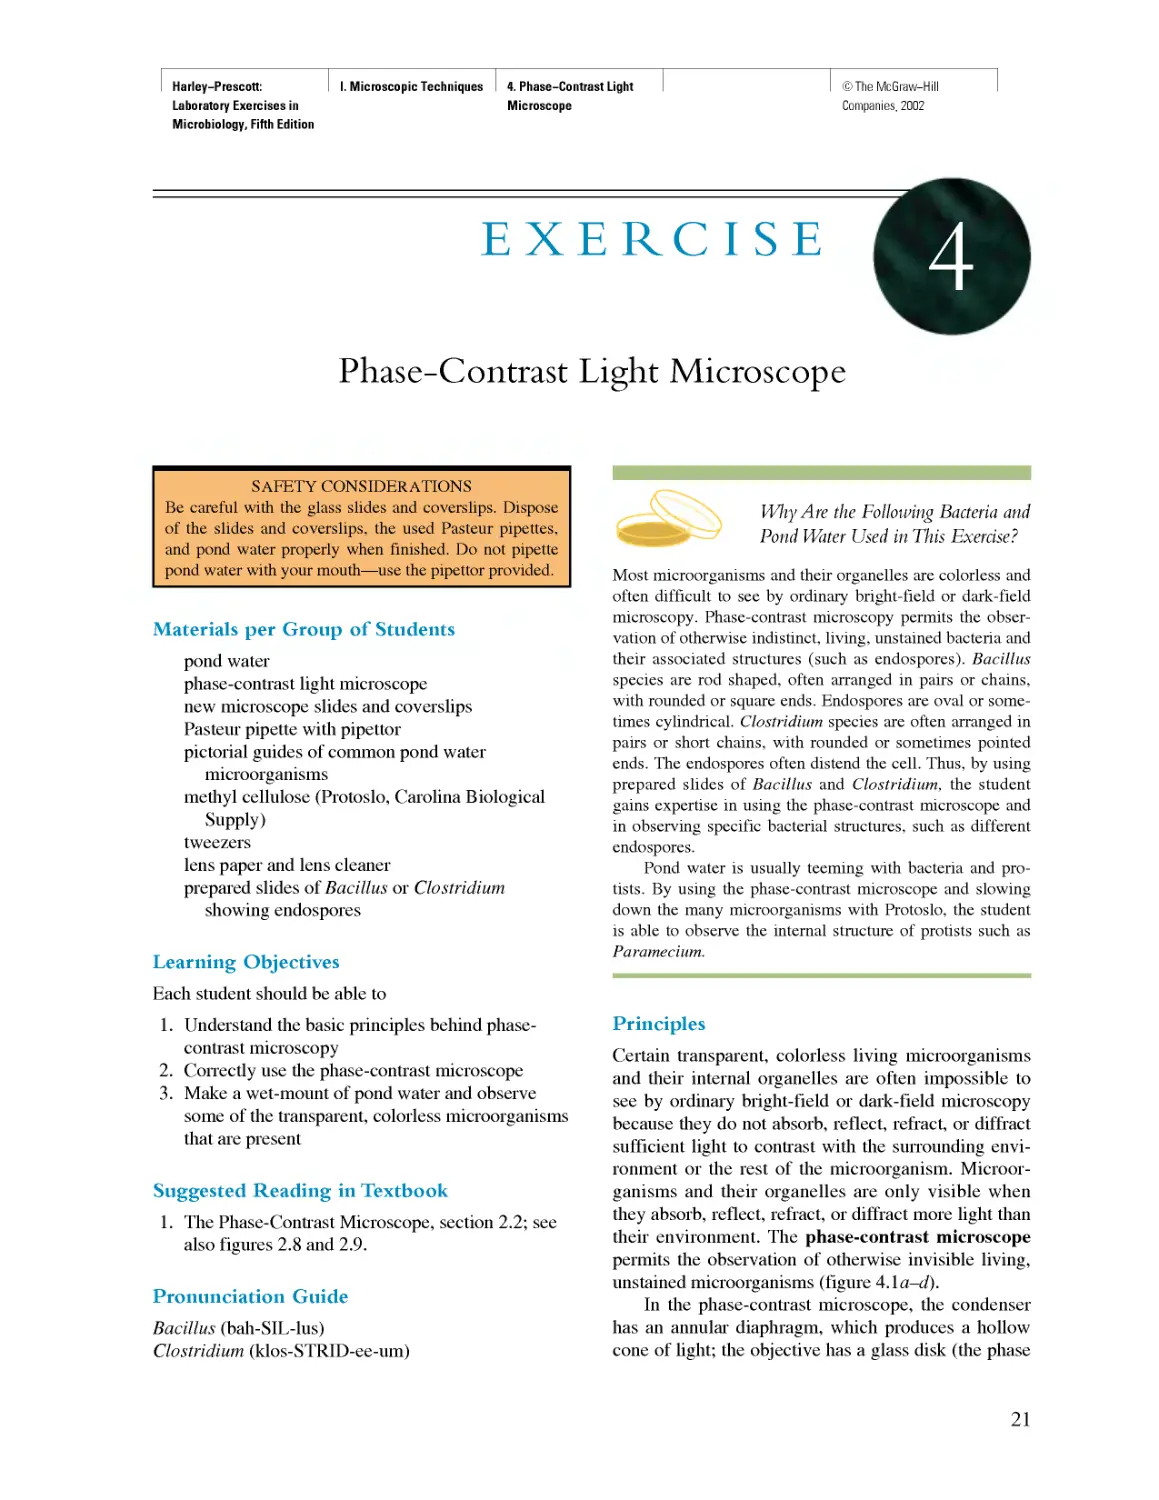 4. Phase-Contrast Light Microscope